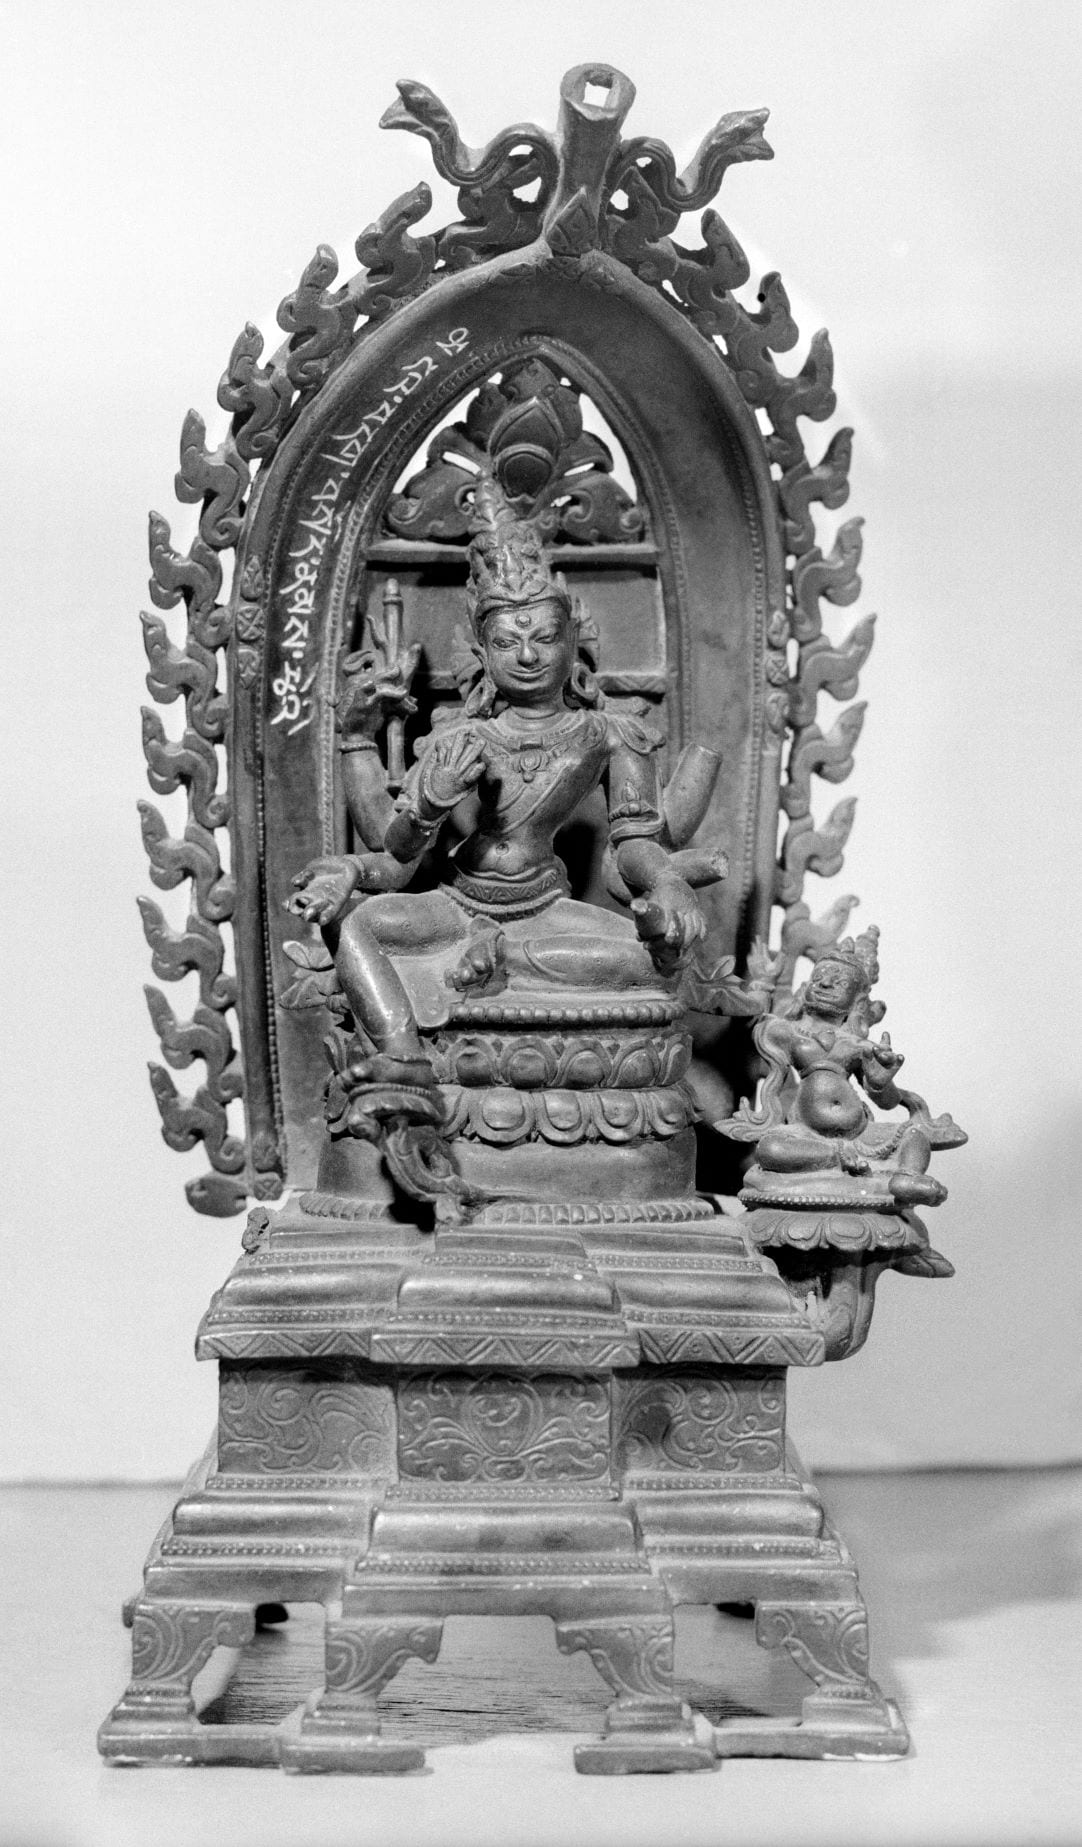 Bronze sculpture of Maitreya Bodhisattva, seated